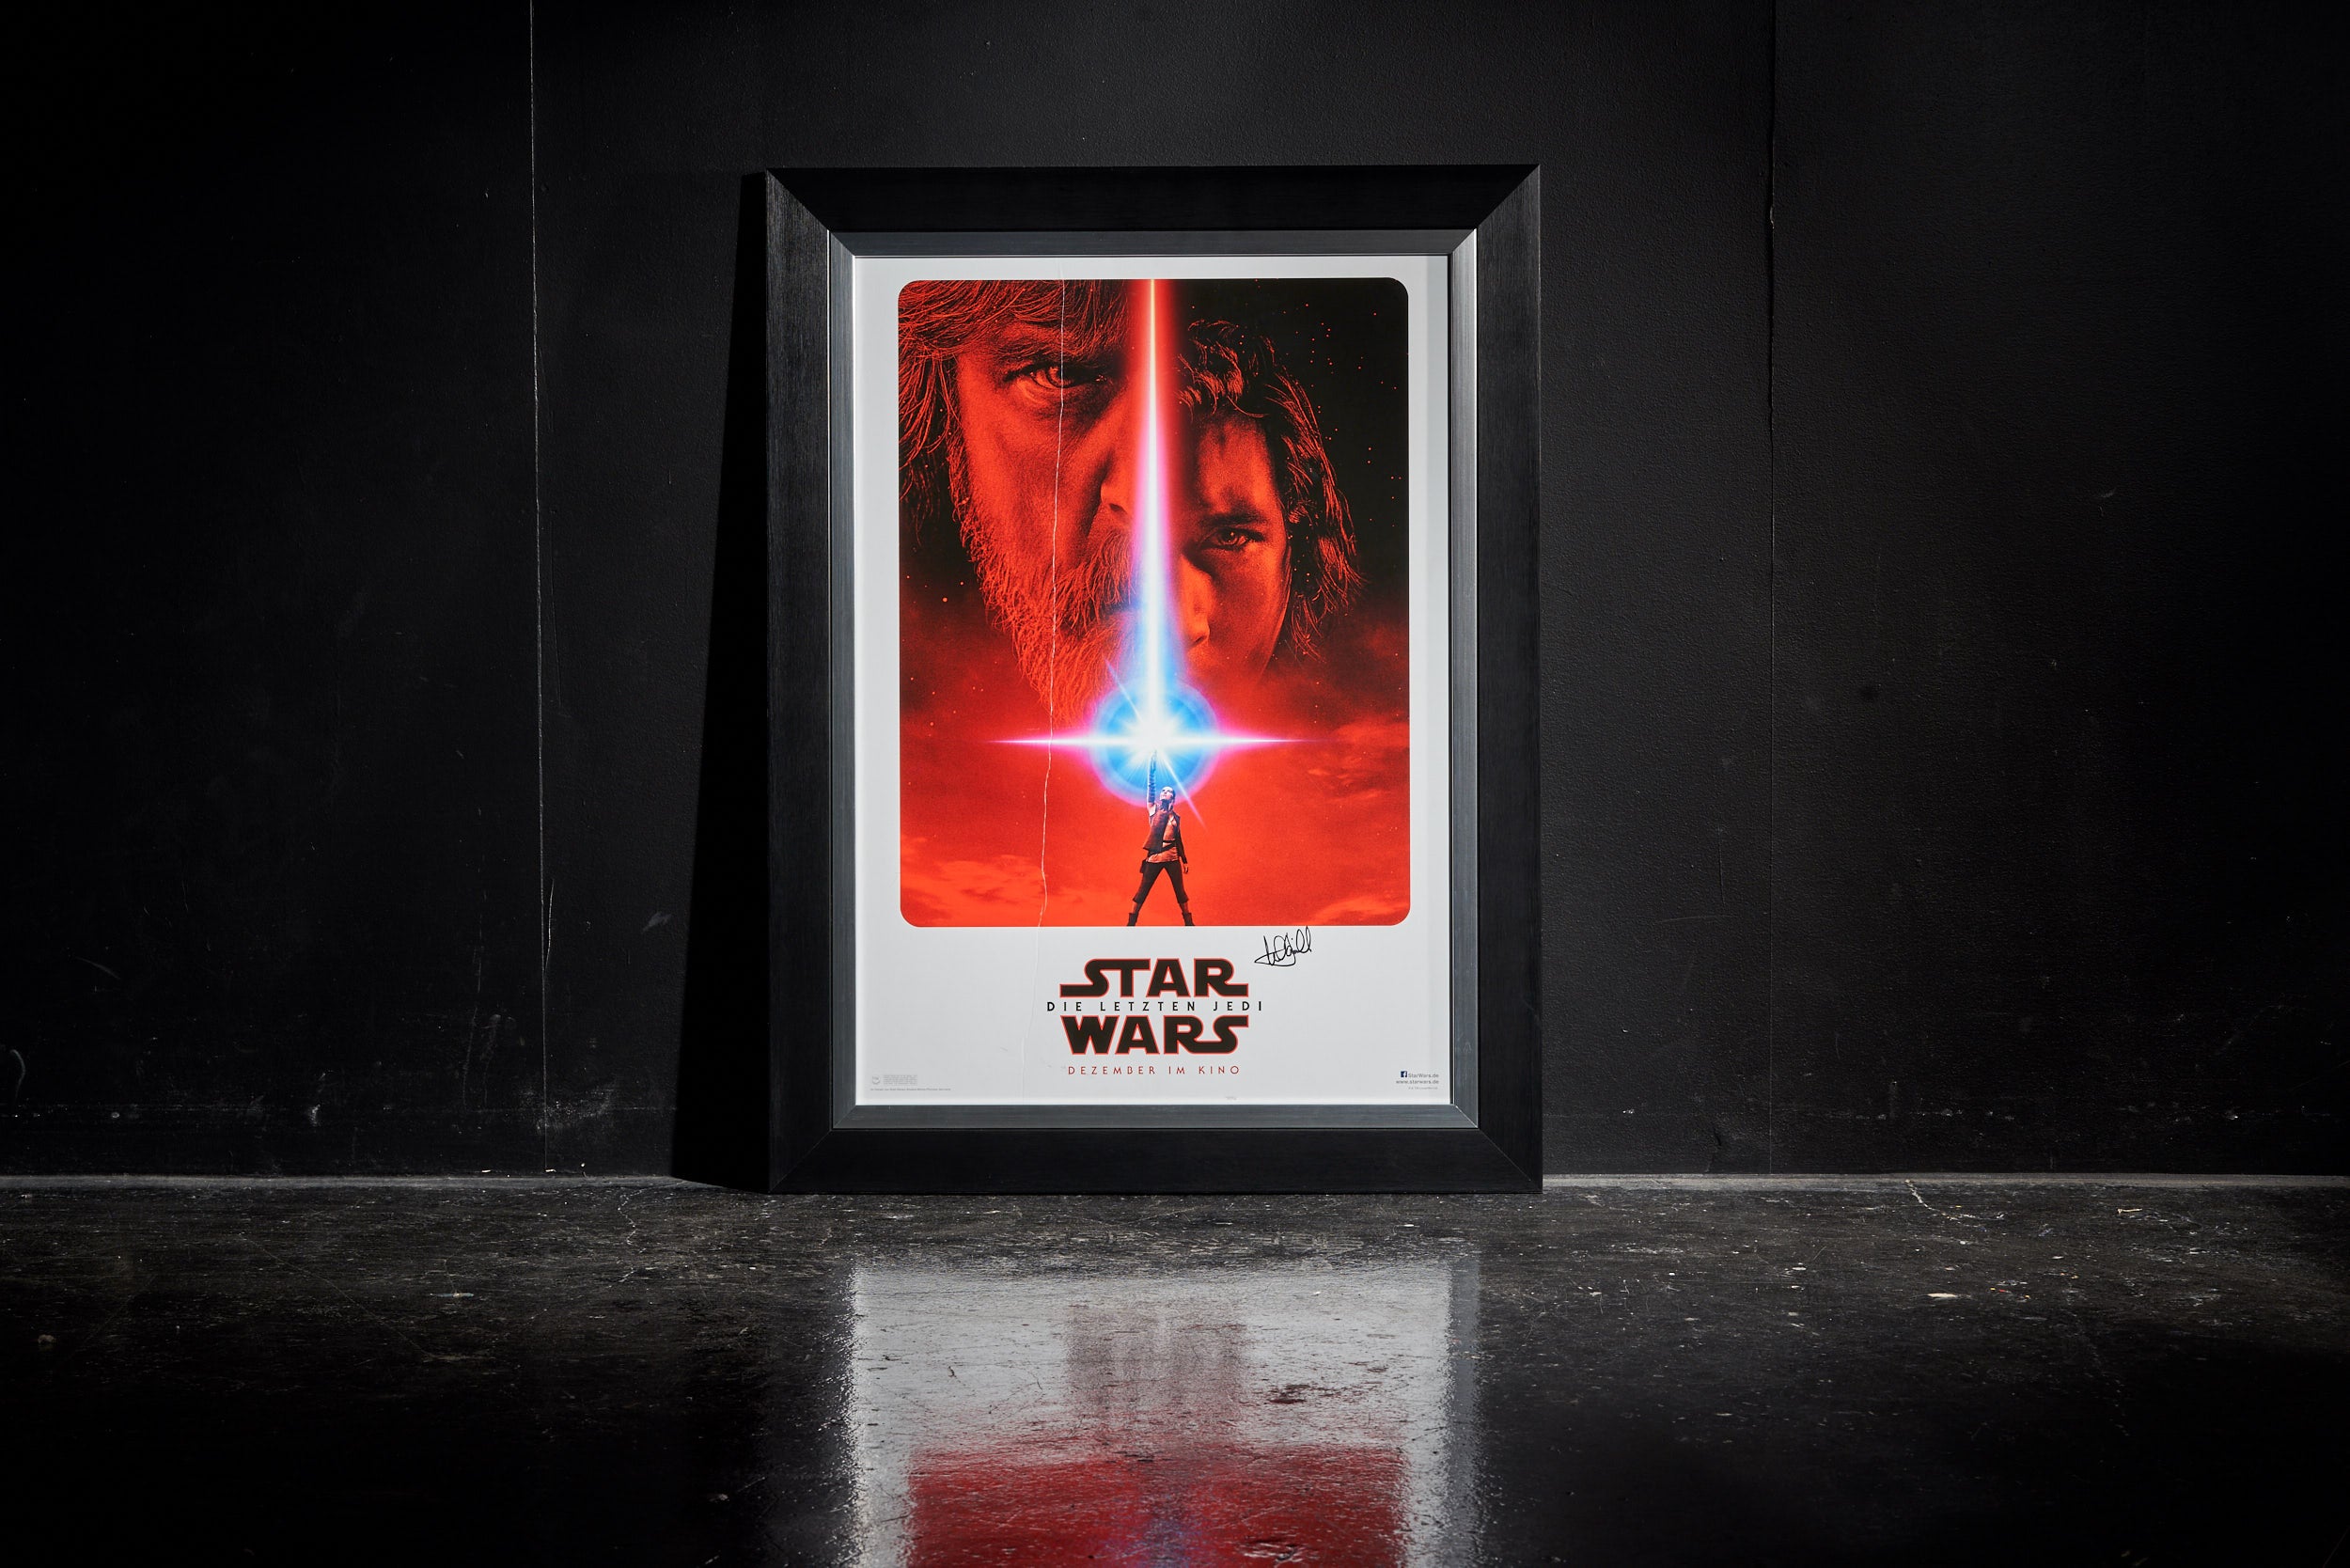 Poster Gallery, The Last Jedi